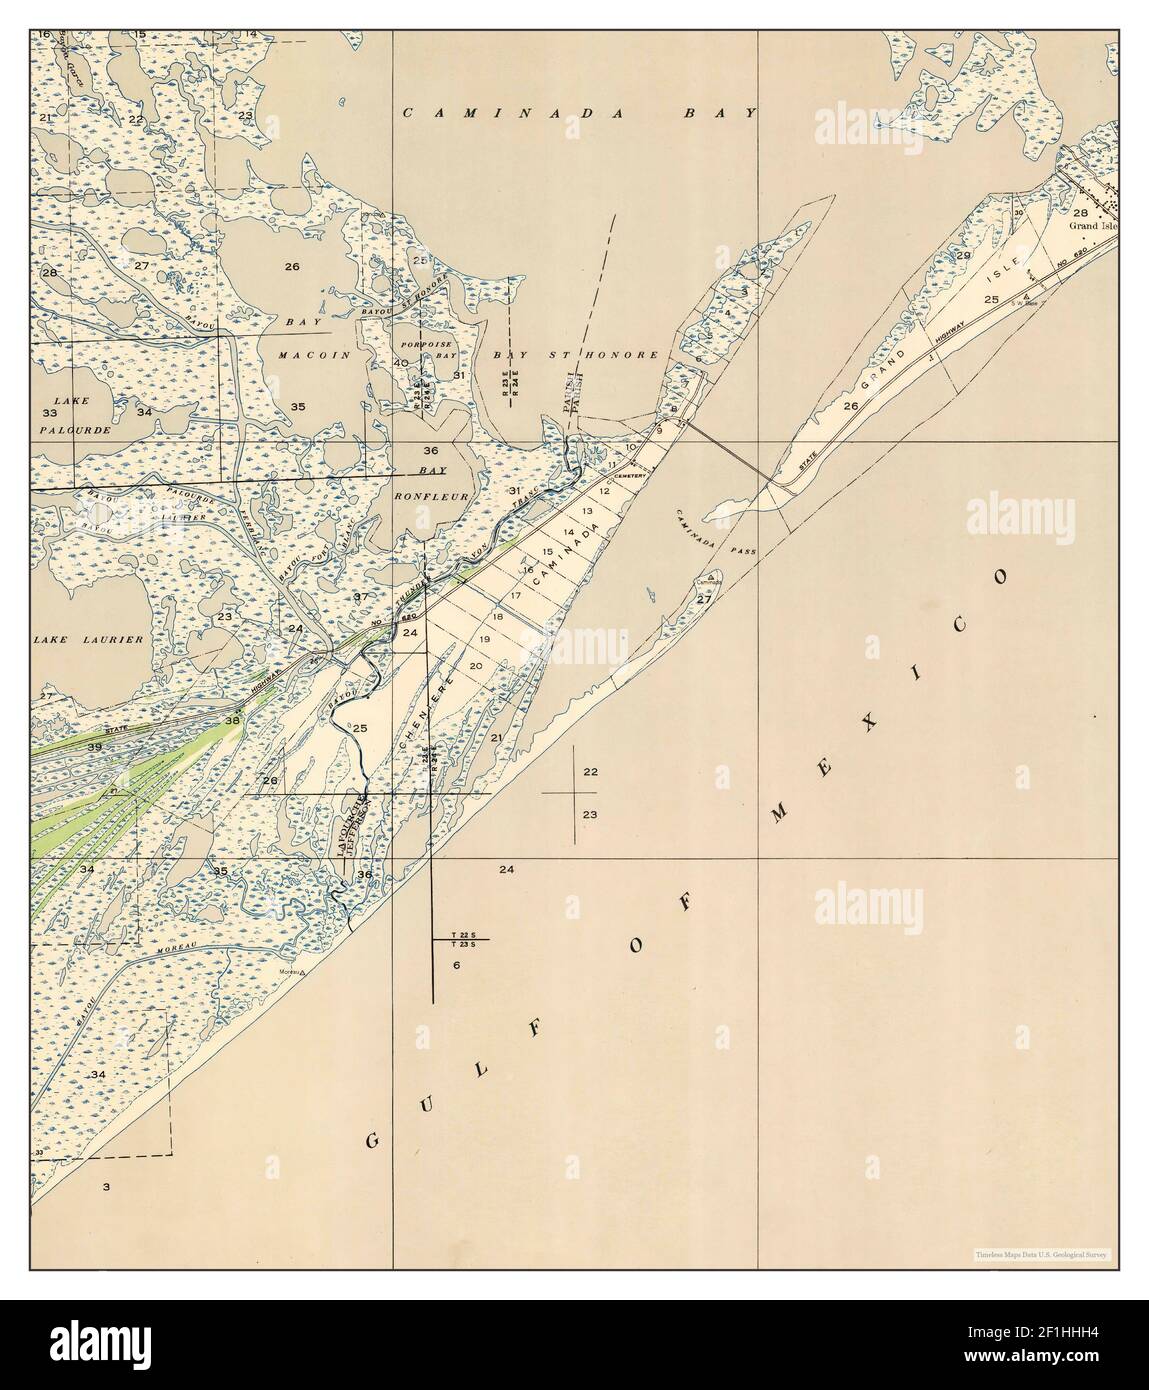 Caminada Pass, Louisiana, map 1947, 1:31680, United States of America by Timeless Maps, data U.S. Geological Survey Stock Photo